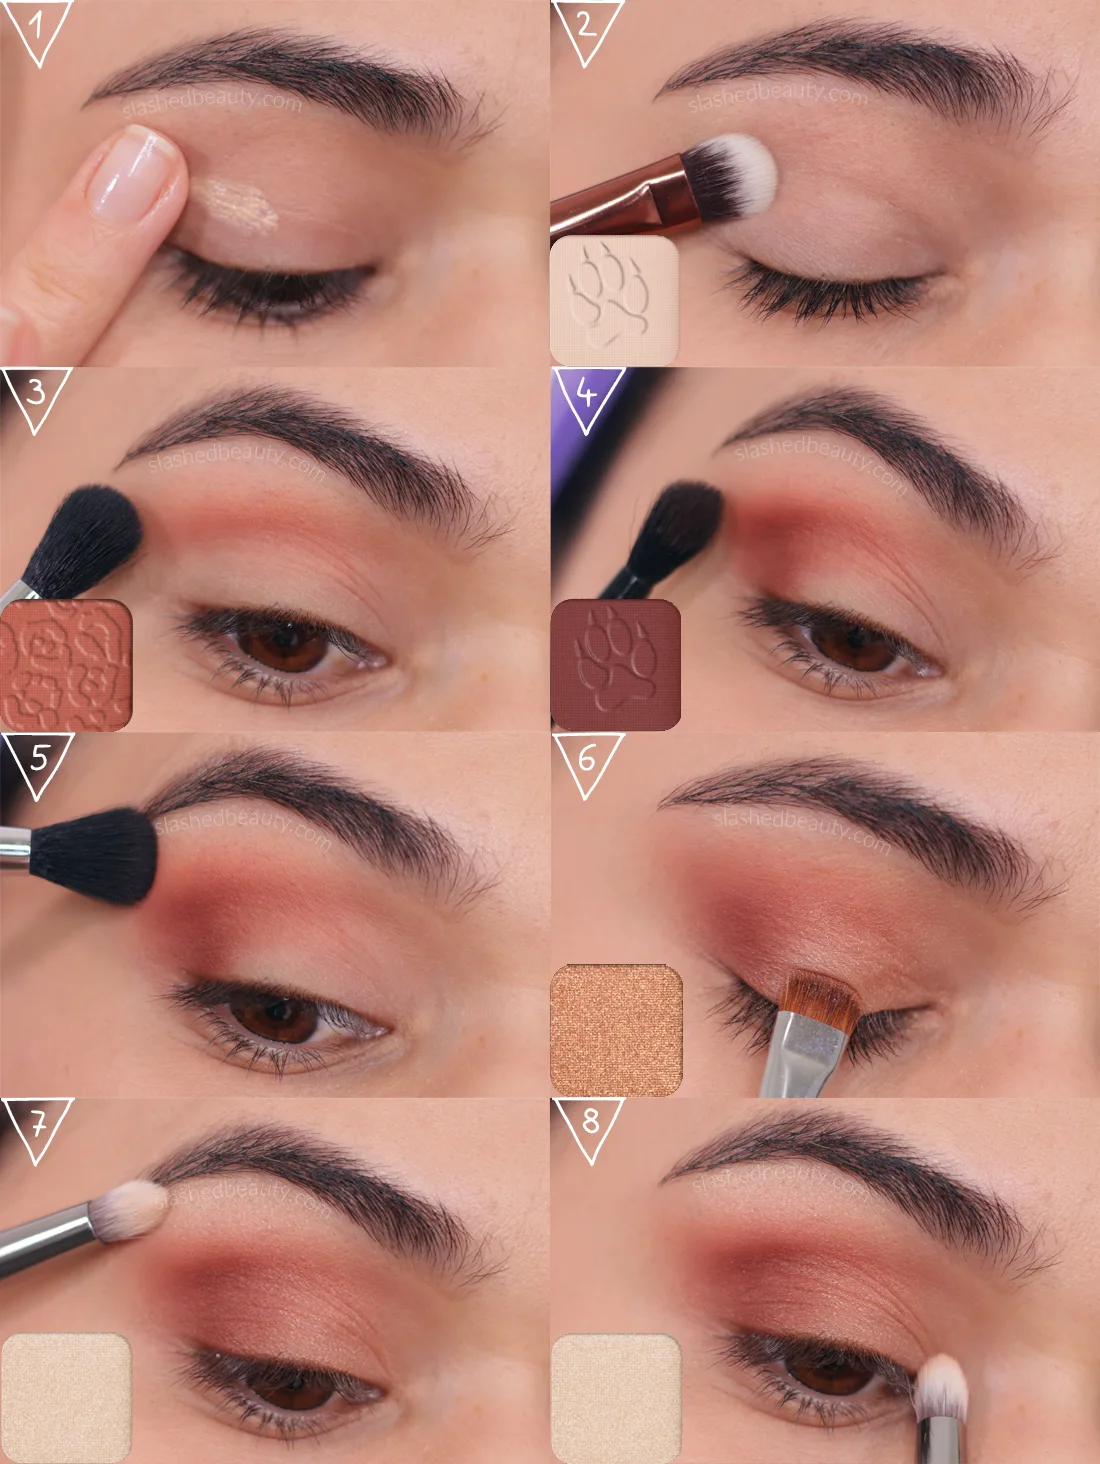 Step by step eyeshadow tutorial for beginners | Basic Eyeshadow Application for Makeup Beginners Tutorial | Slashed Beauty